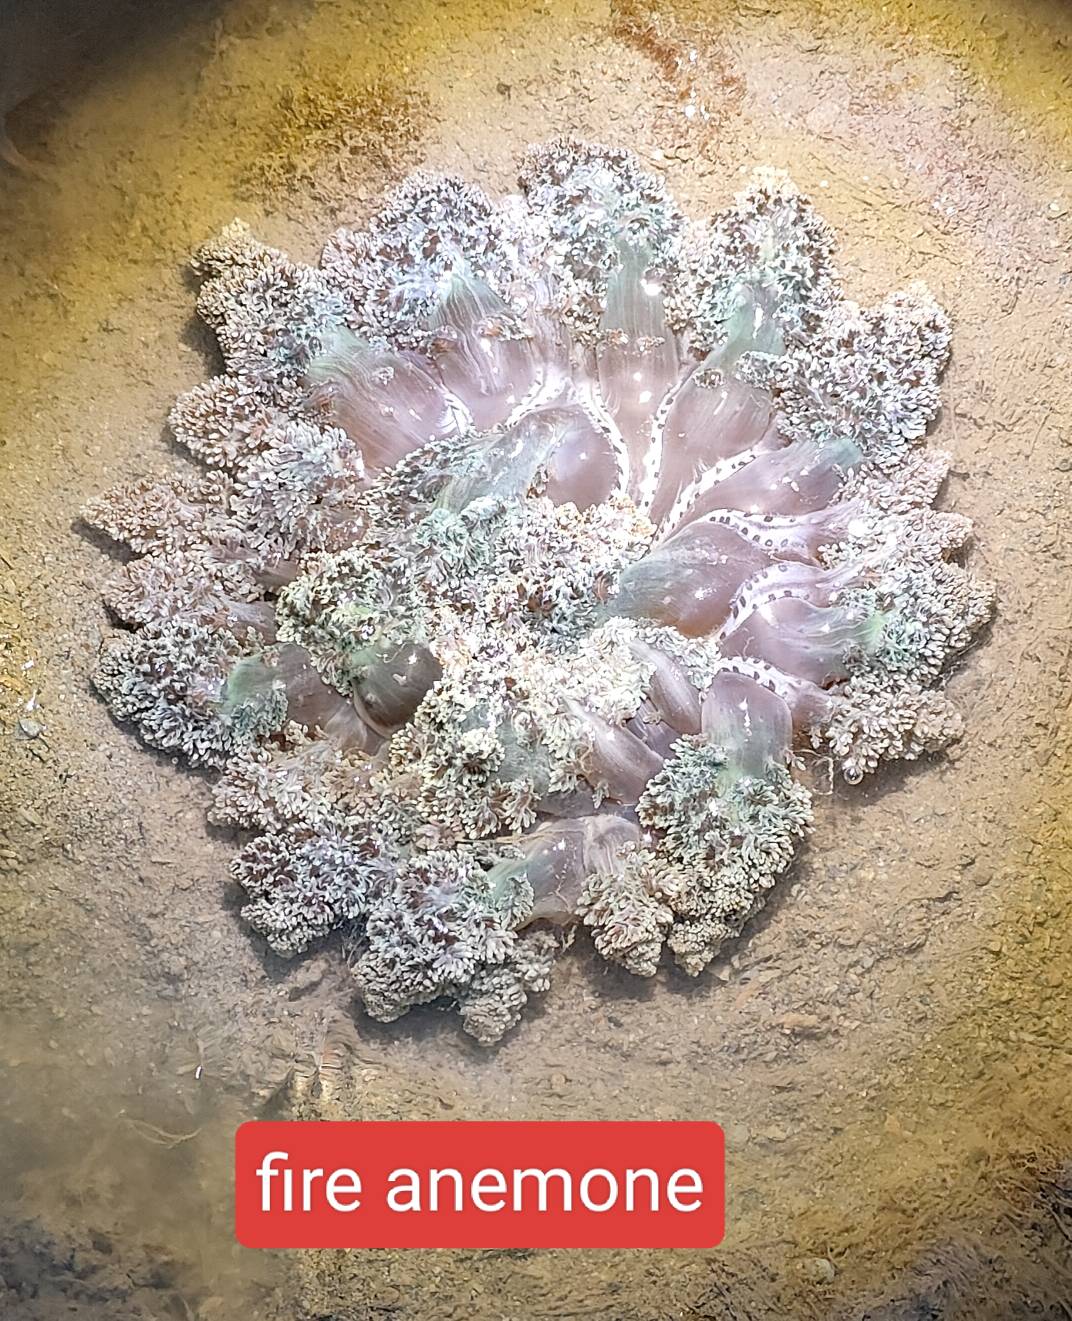 Fire anemone